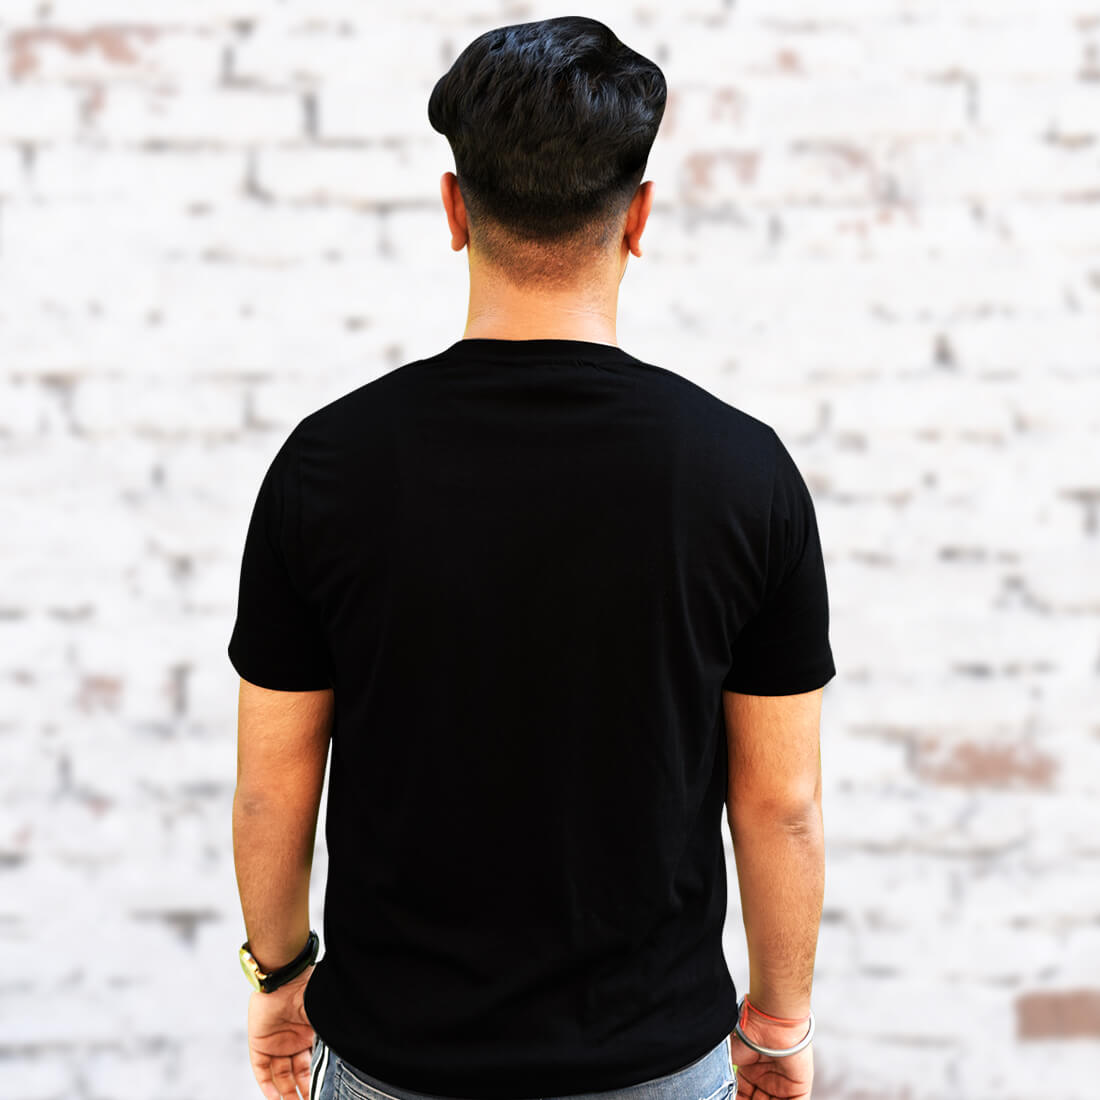 OM Best Design Printed Plain Black T Shirt Mens